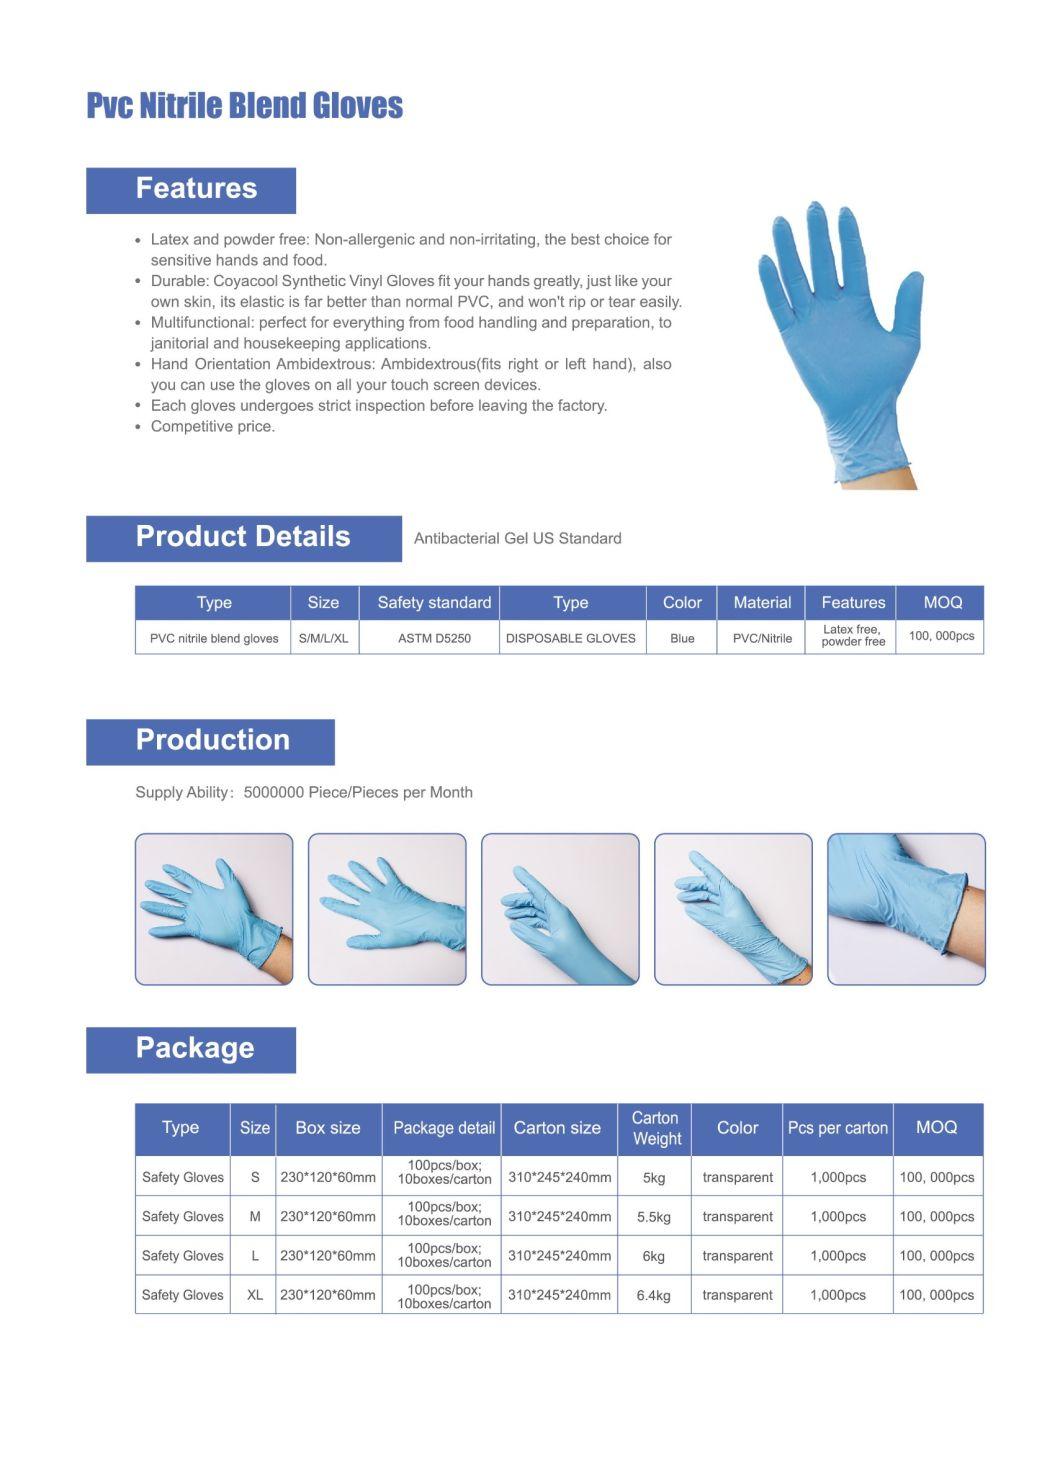 Good Quality Large Surgical Gloves for Sensitive Skin